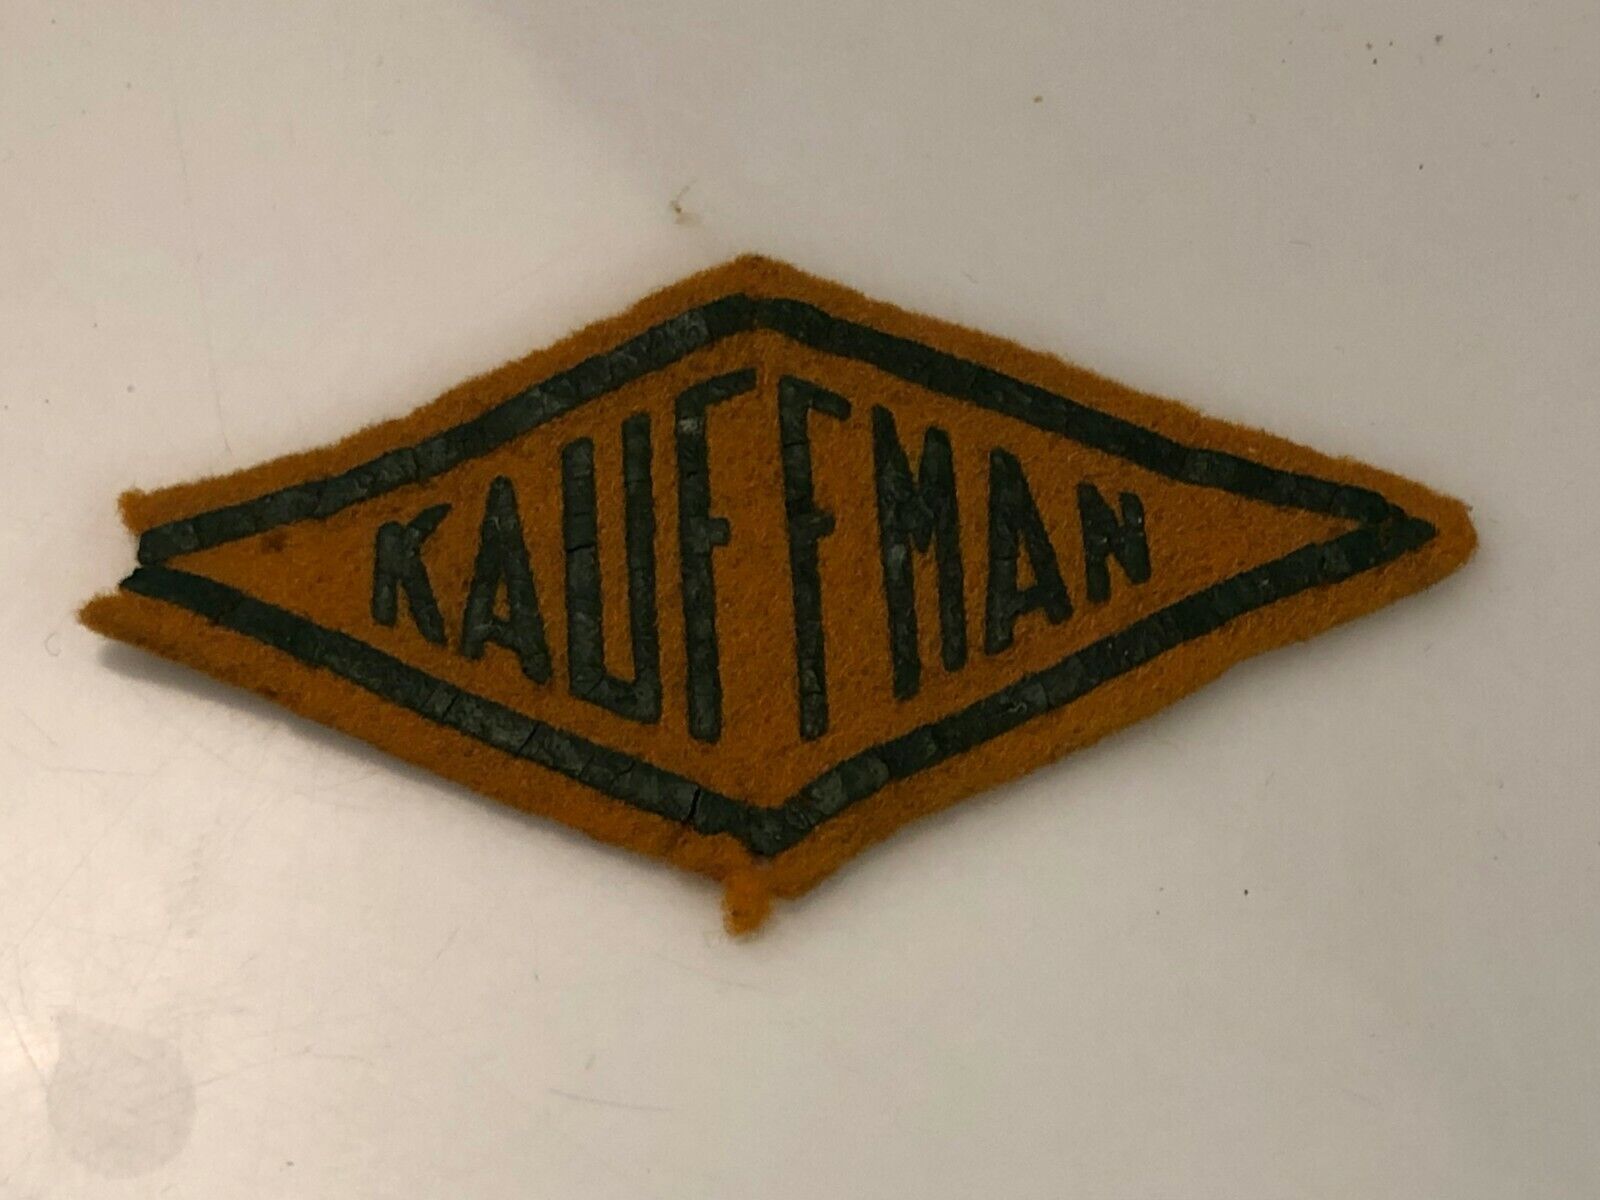 Camp Kauffman Felt Camp Patch